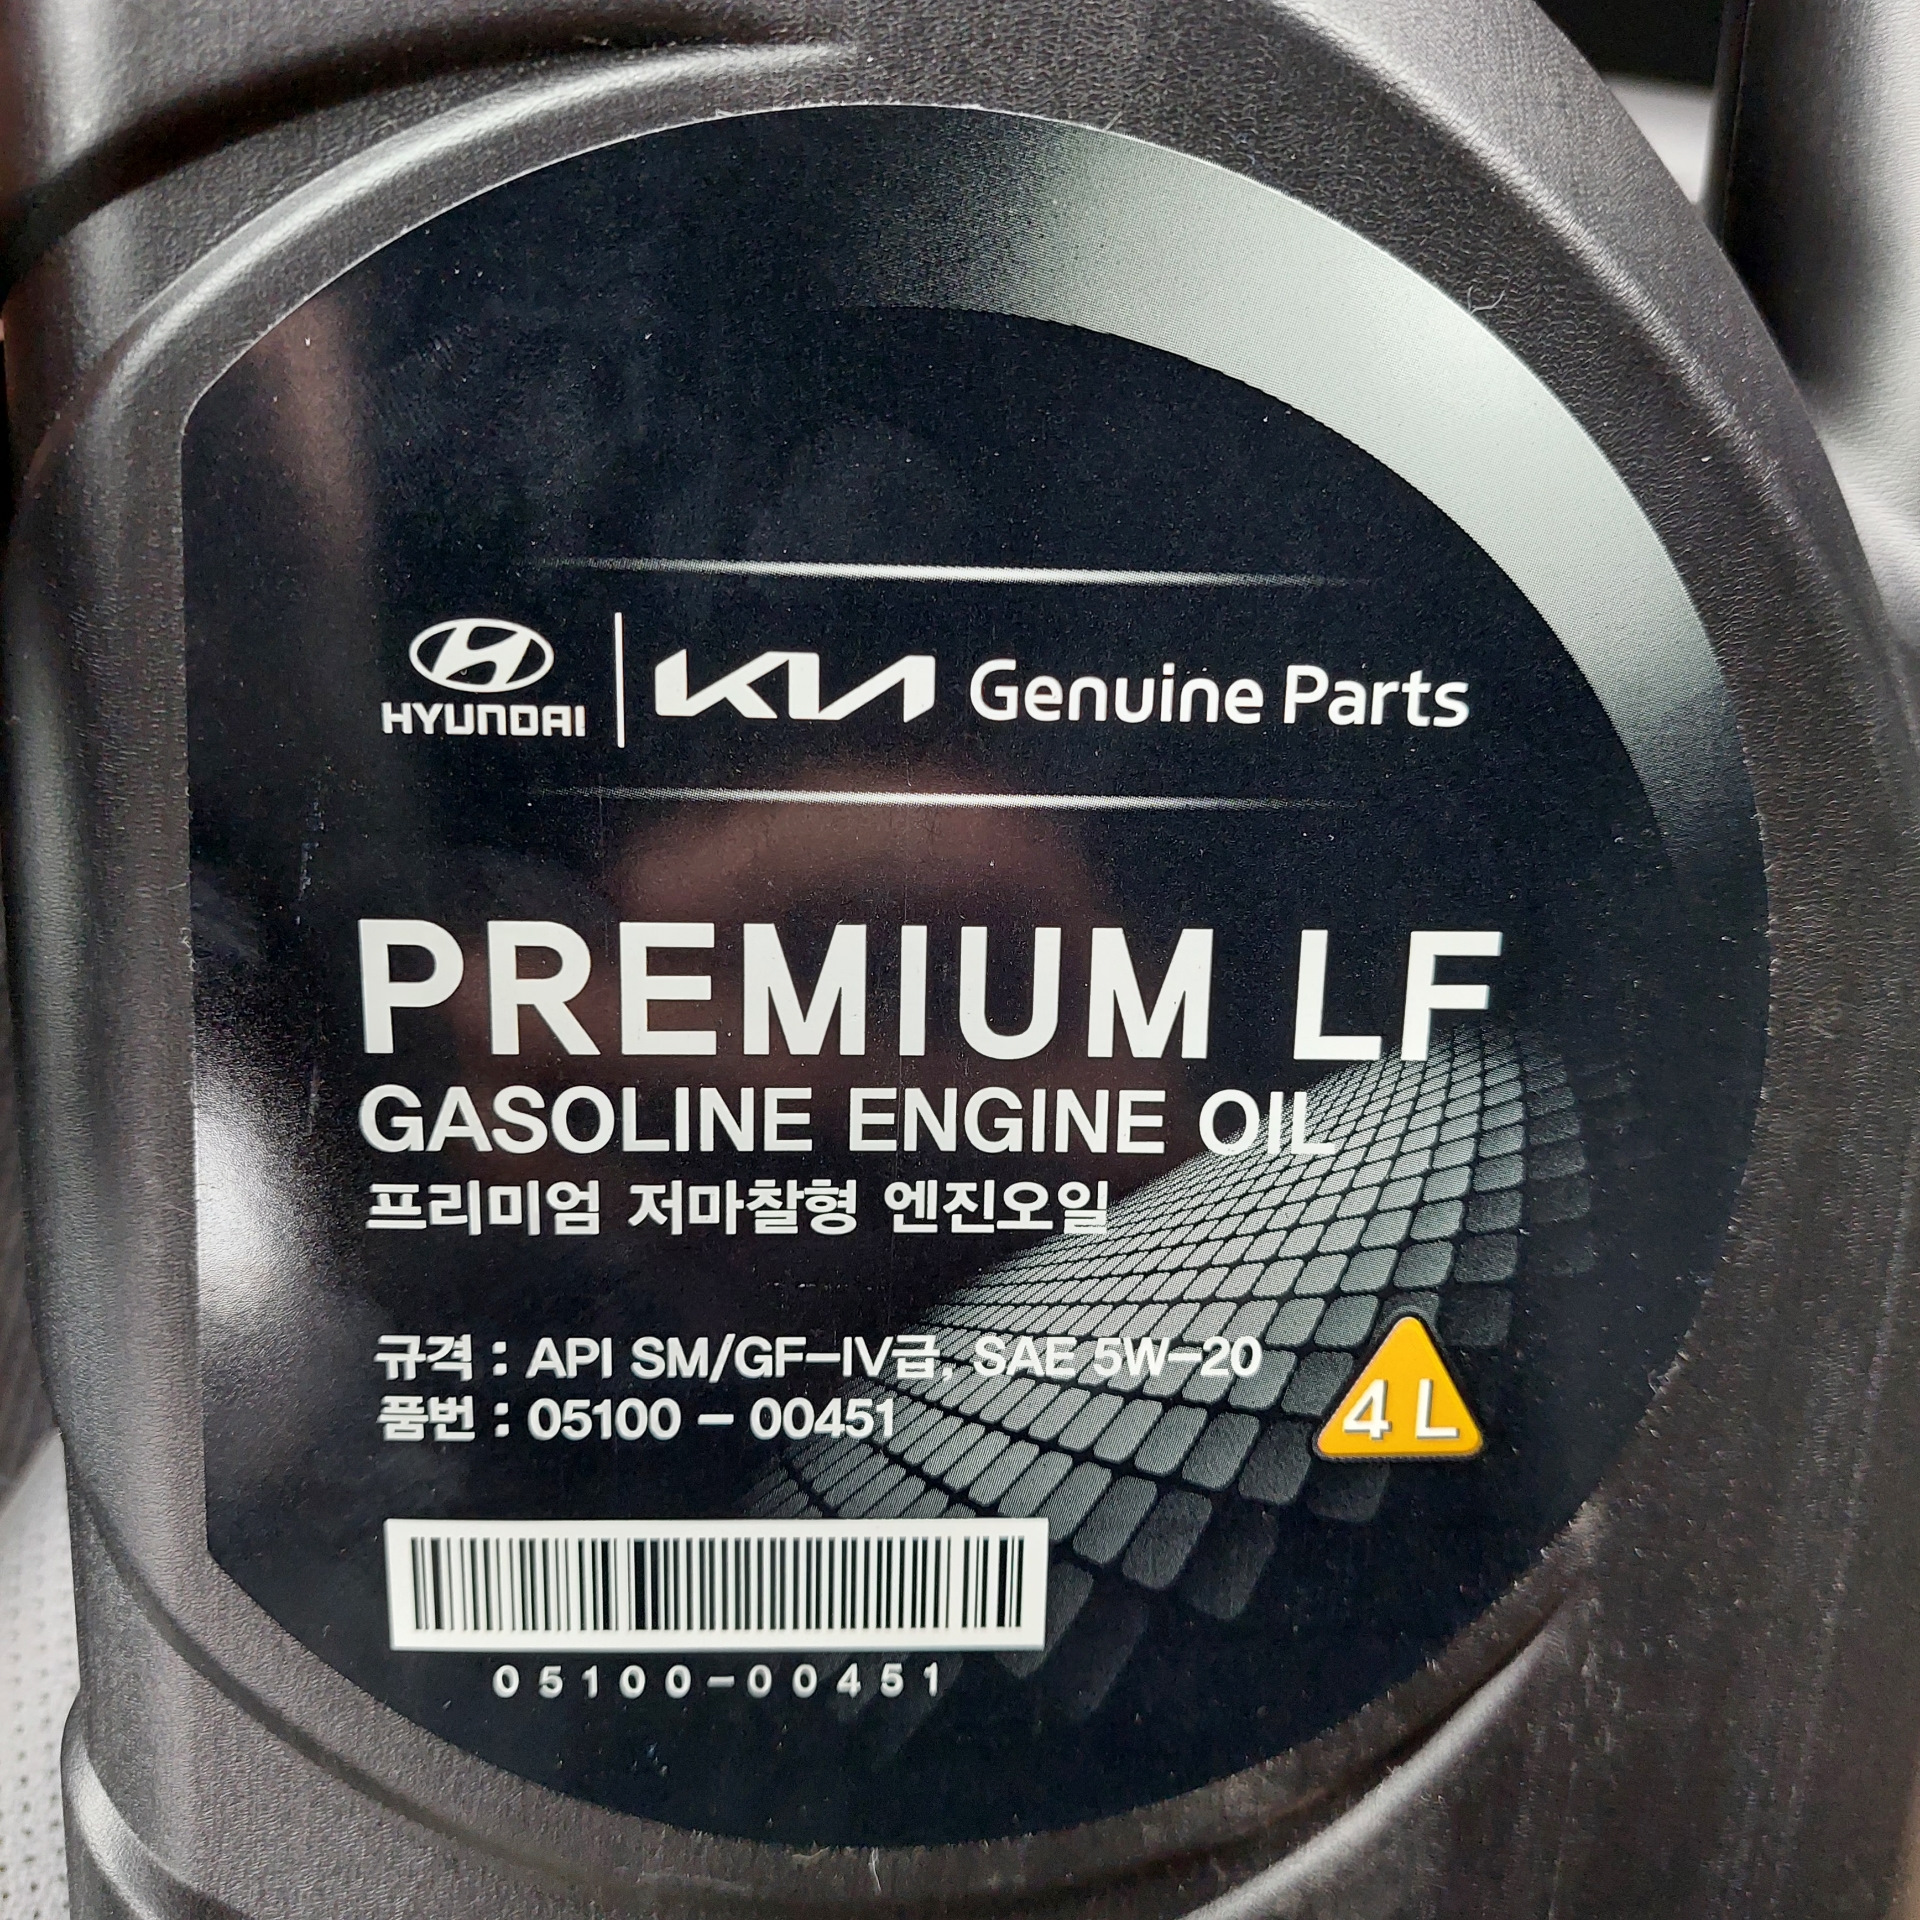 Моторное масло hyundai отзывы. Premium LF gasoline 5w-20. Hyundai Premium LF 5w-20. Hyundai Premium gasoline 5w-20. Масло Хендай 5w20 премиум LF.